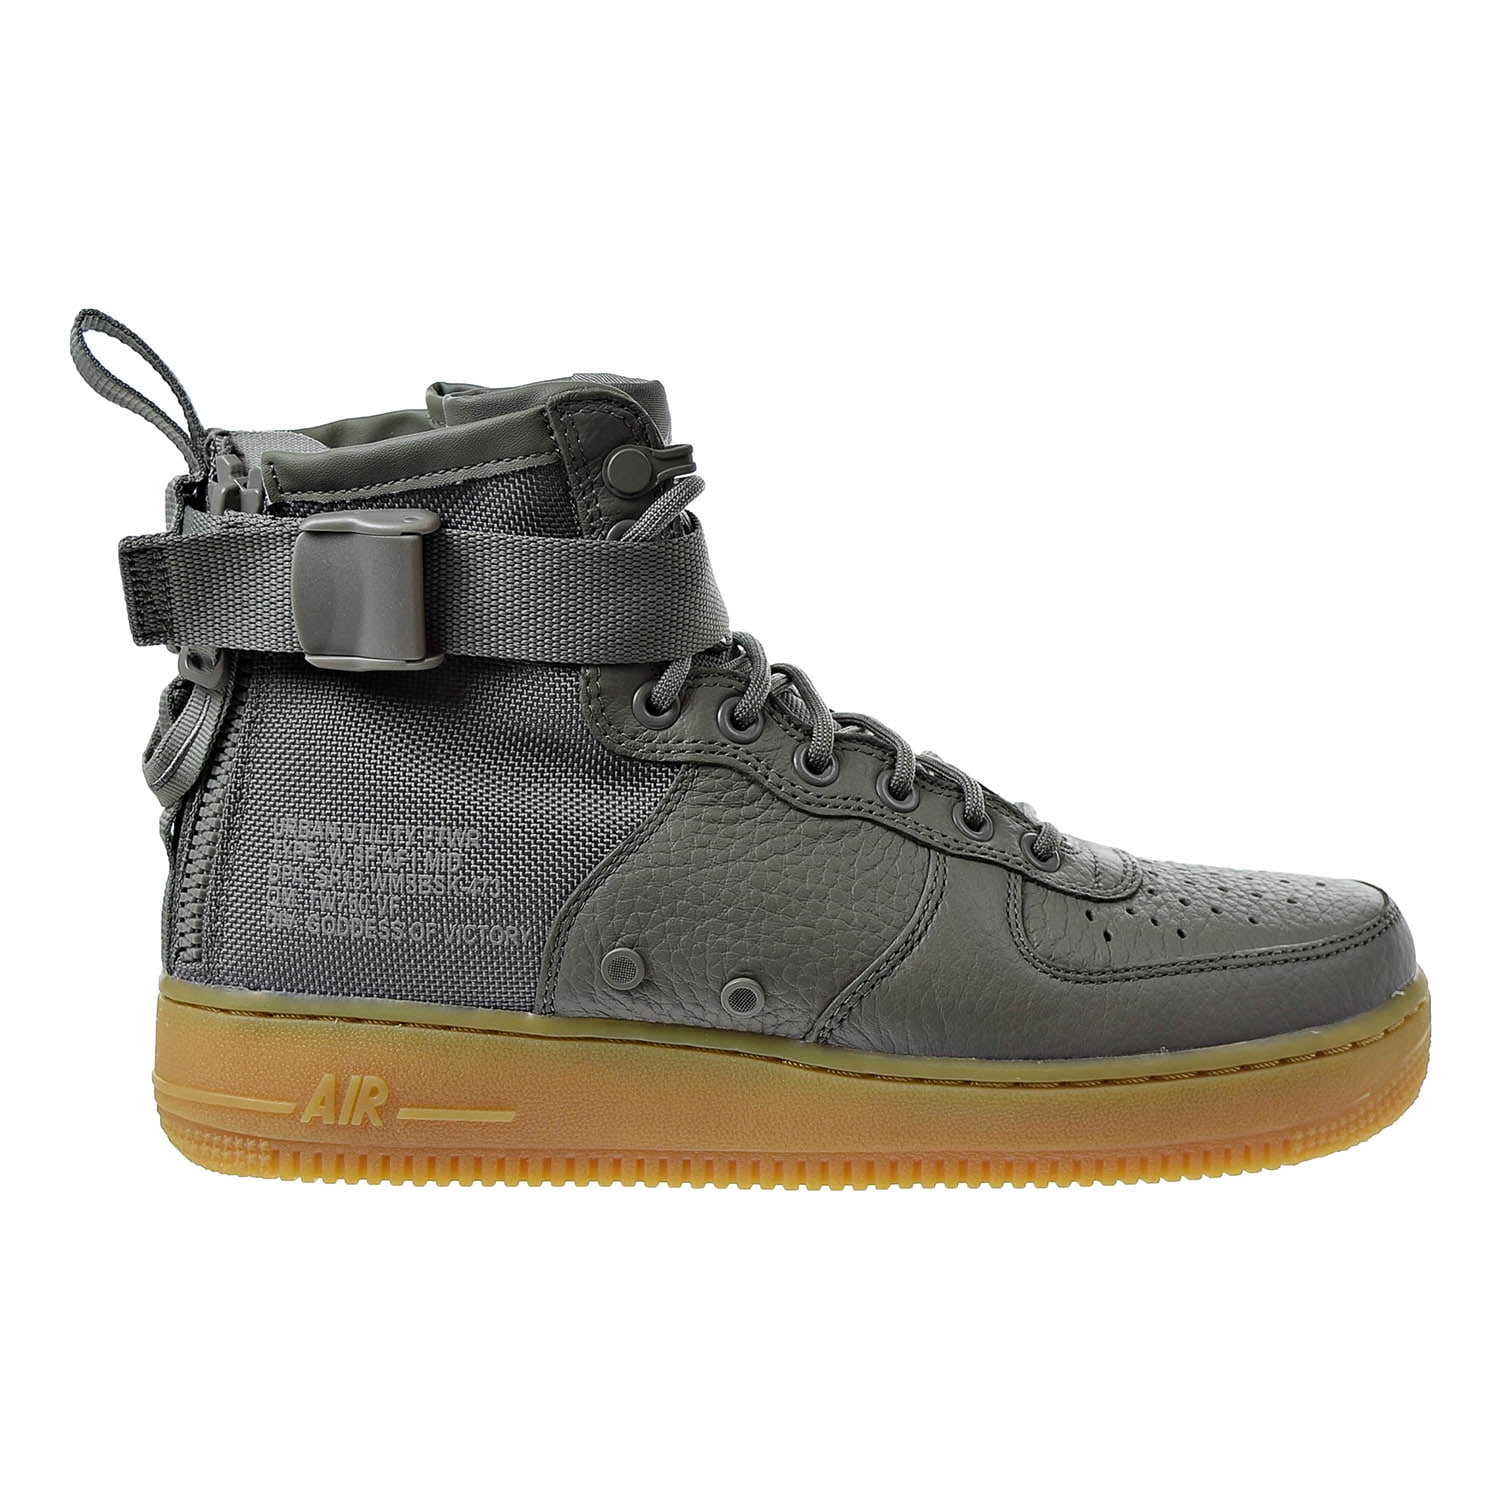 SF Air Force 1 Women's Sneakers Dark Stucco-Dark Stucco aa3966-004 -